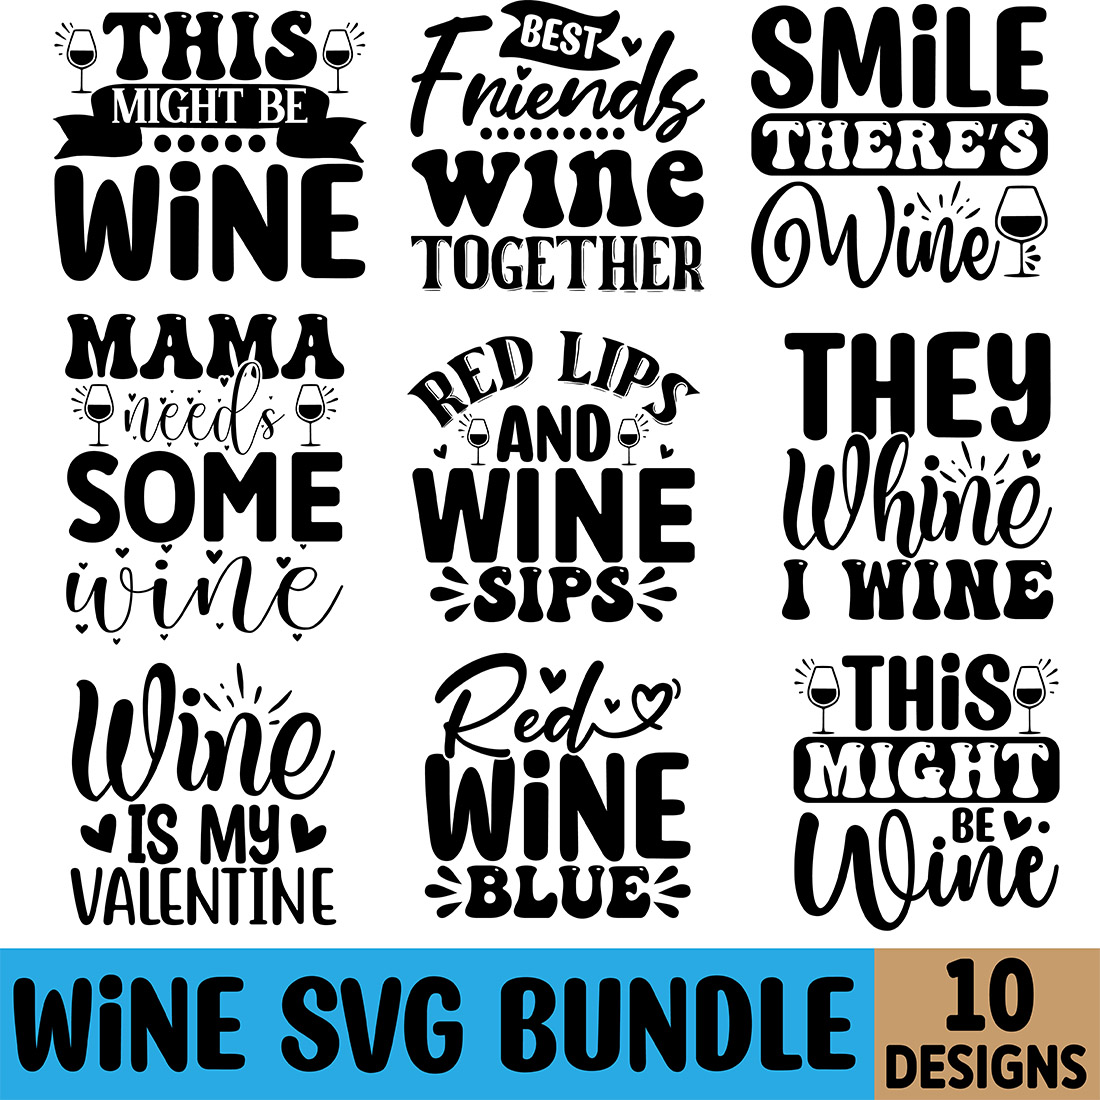 Wine SVG Bundle preview image.